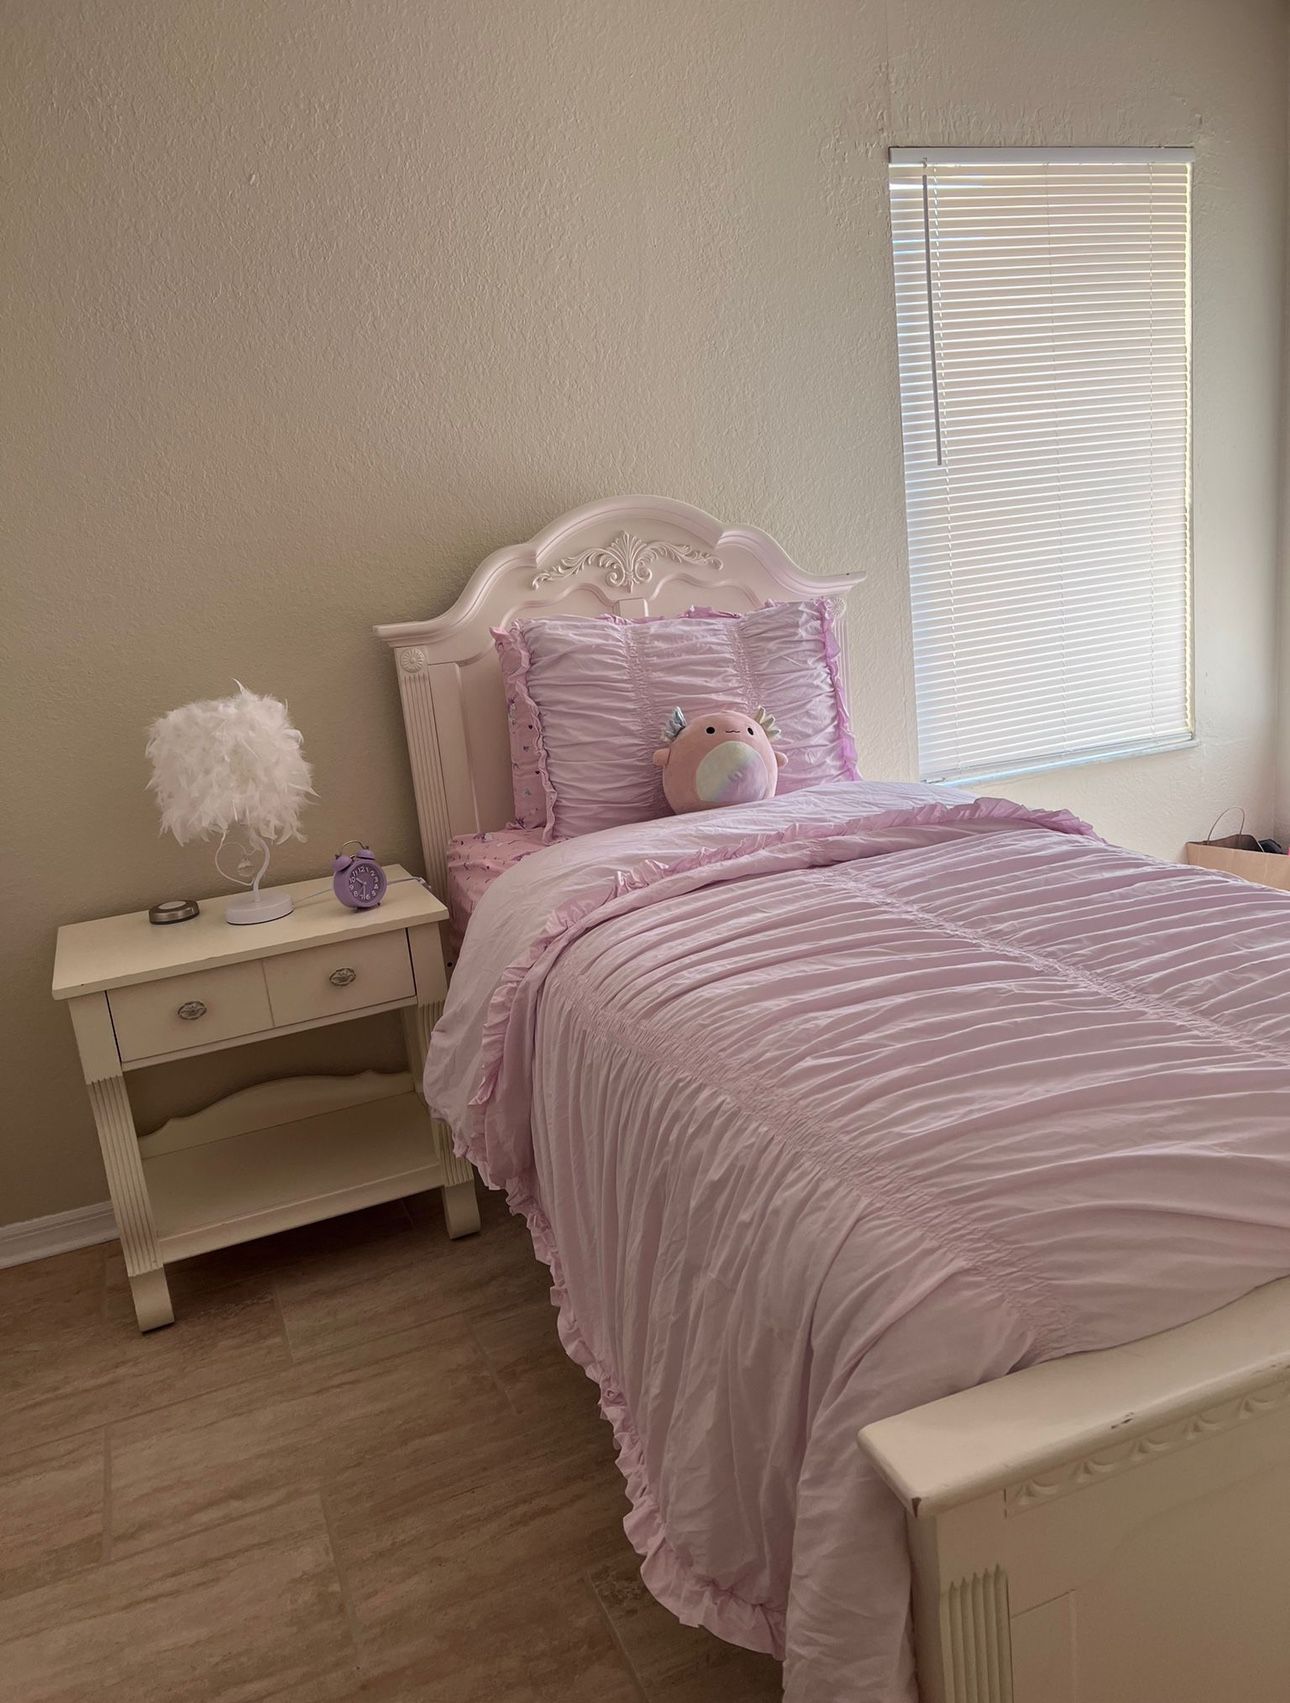 Disney Twin Bedroom Set From Rooms To Go